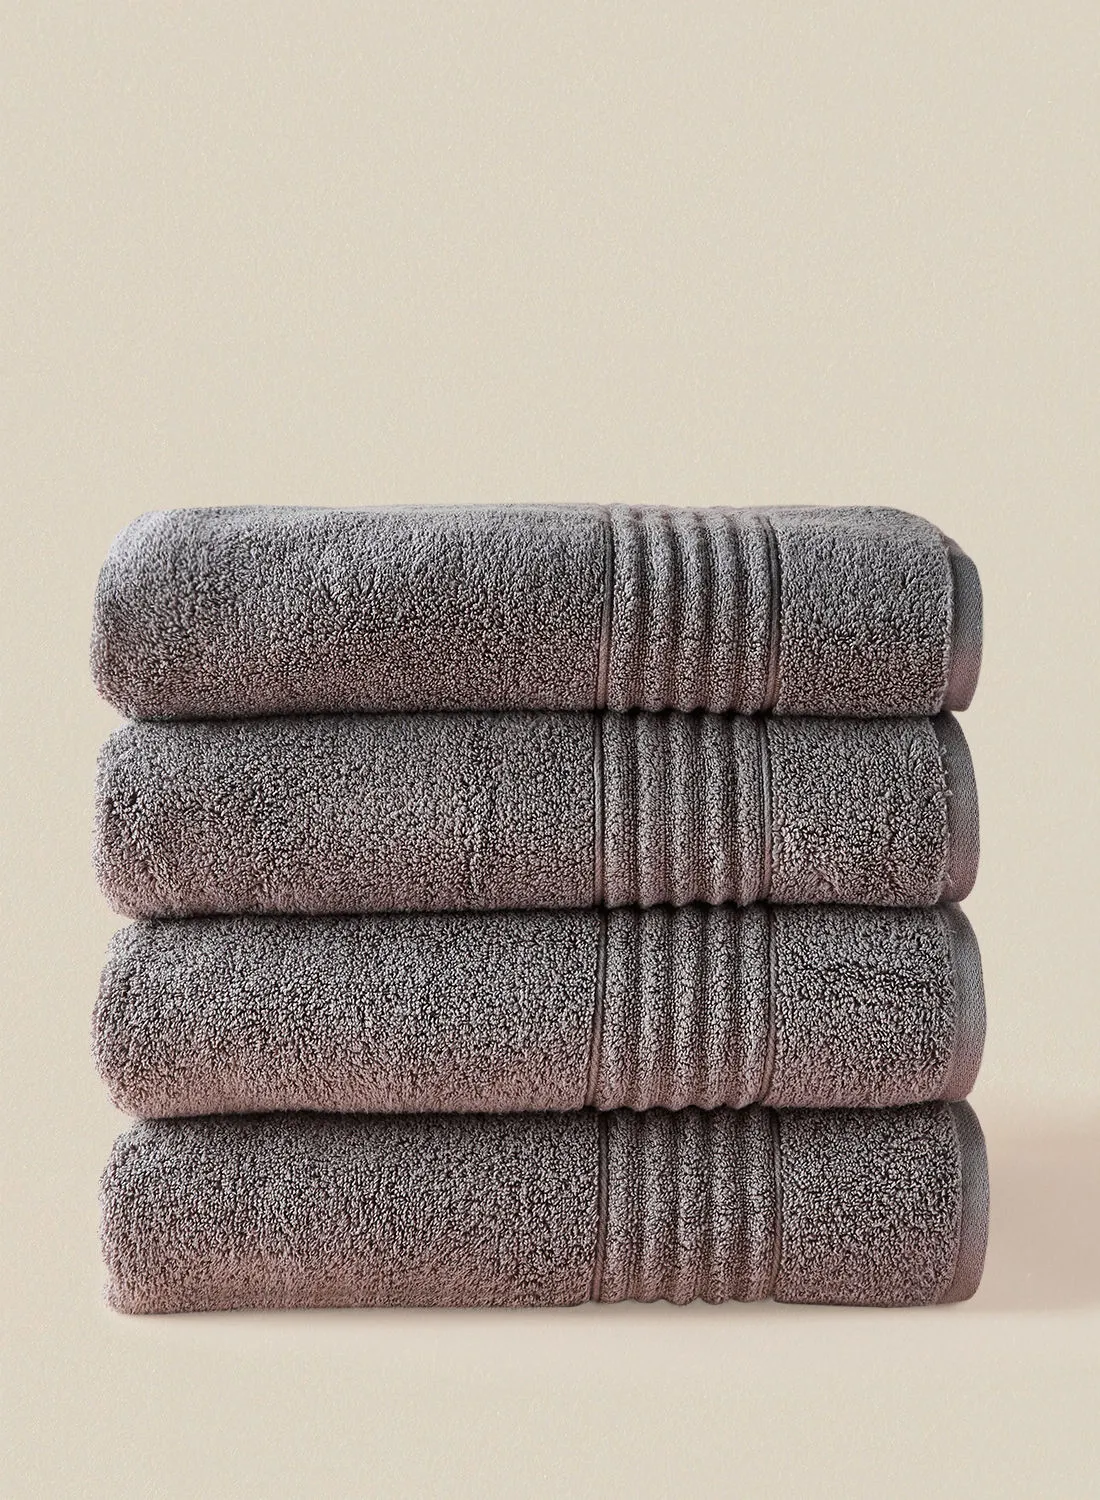 noon east 4 Piece Bathroom Towel Set - 500 GSM 100% Cotton - 4 Bath Towel - Grey Color - Highly Absorbent - Fast Dry